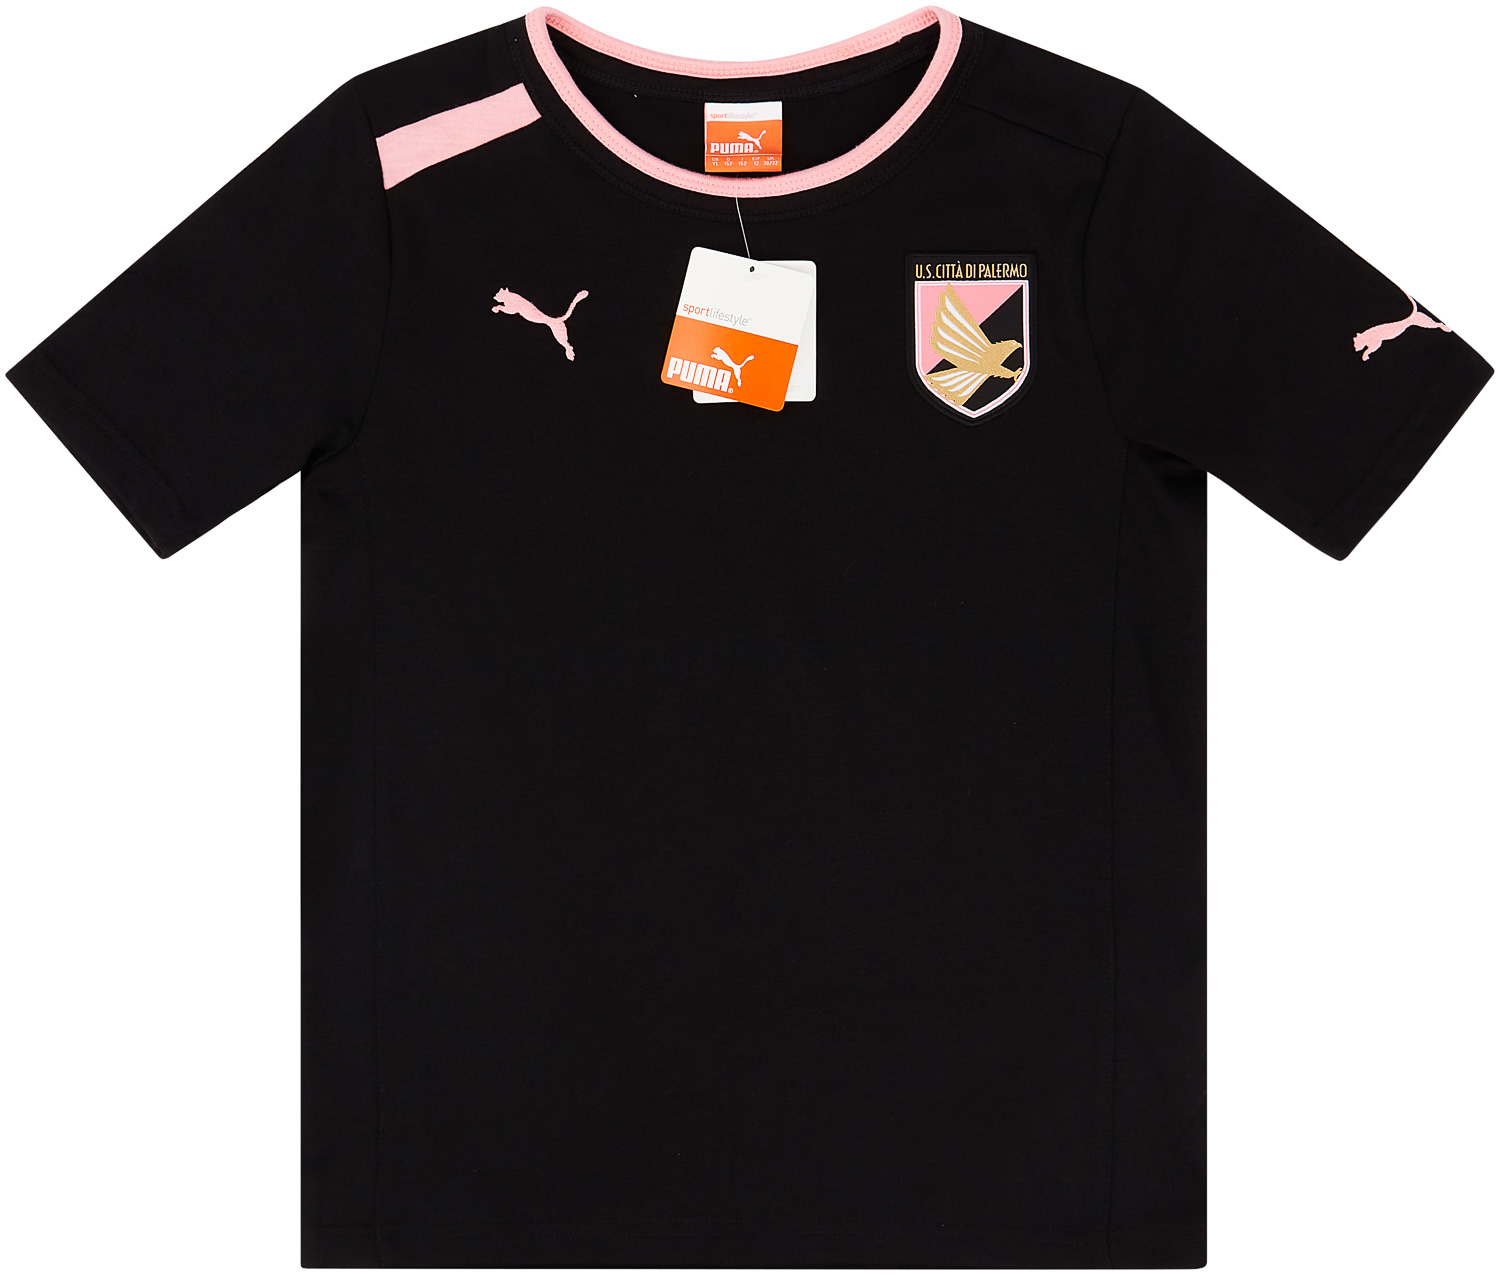 U.S. Citta Di Palermo T-Shirt S/S